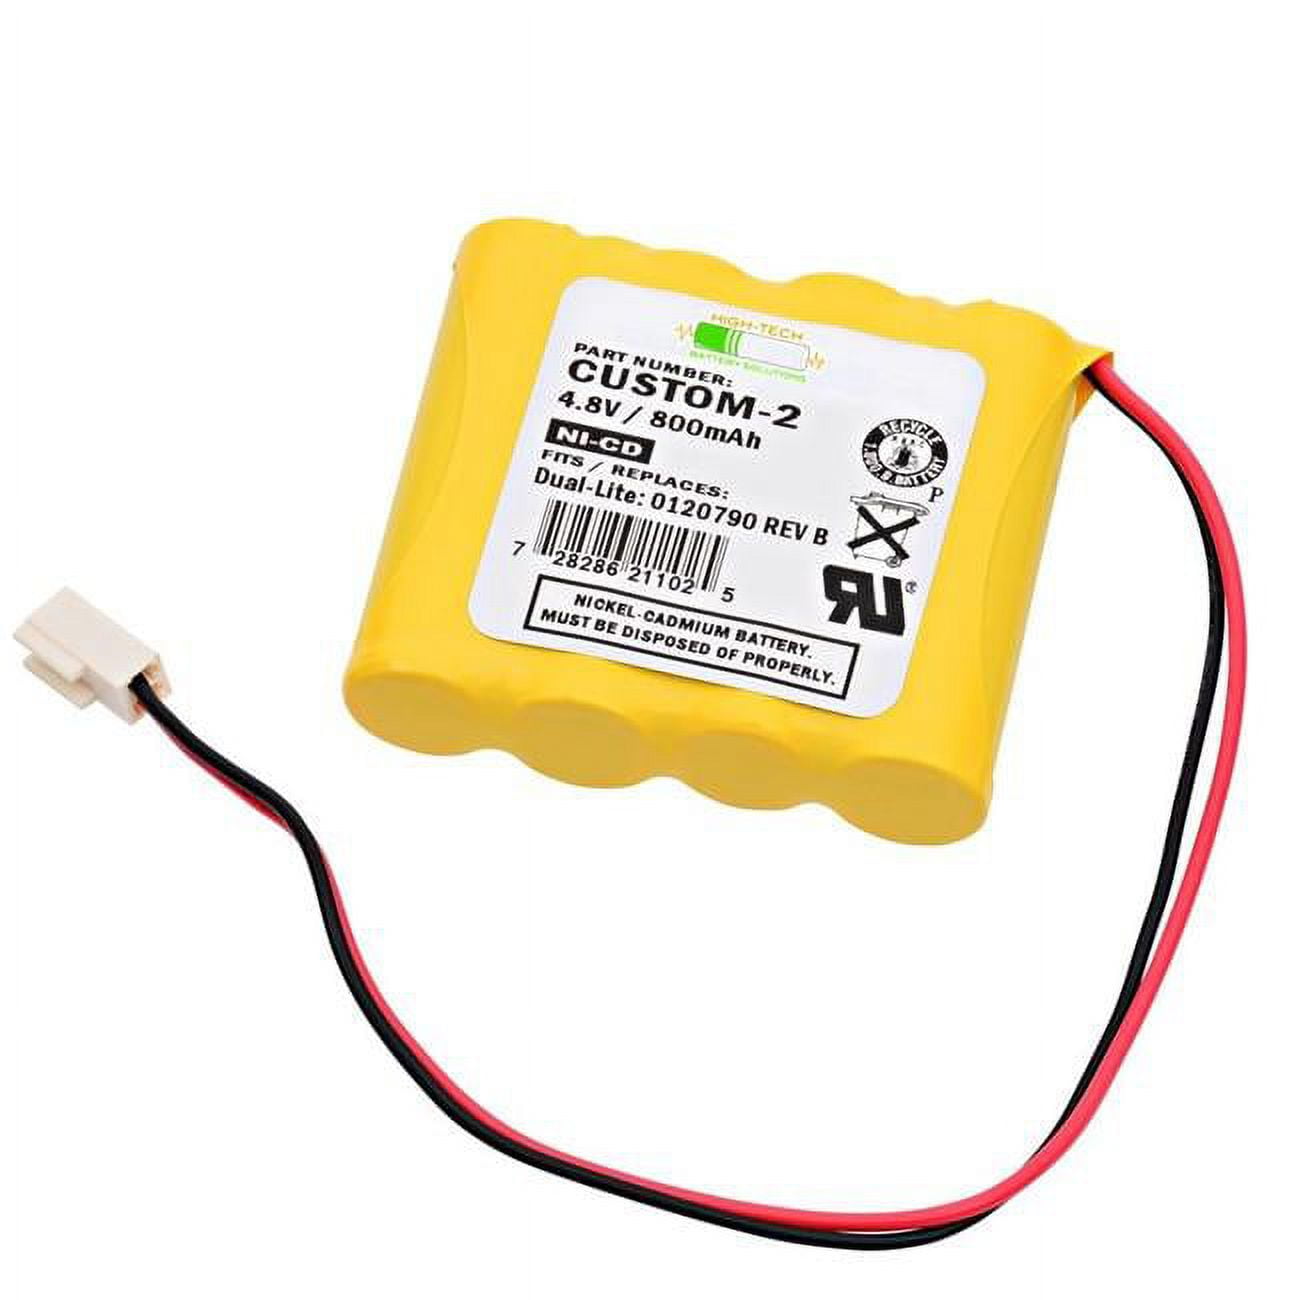 Picture of Dantona CUSTOM-2 Dual-Lite Replacement Emergency Light Battery